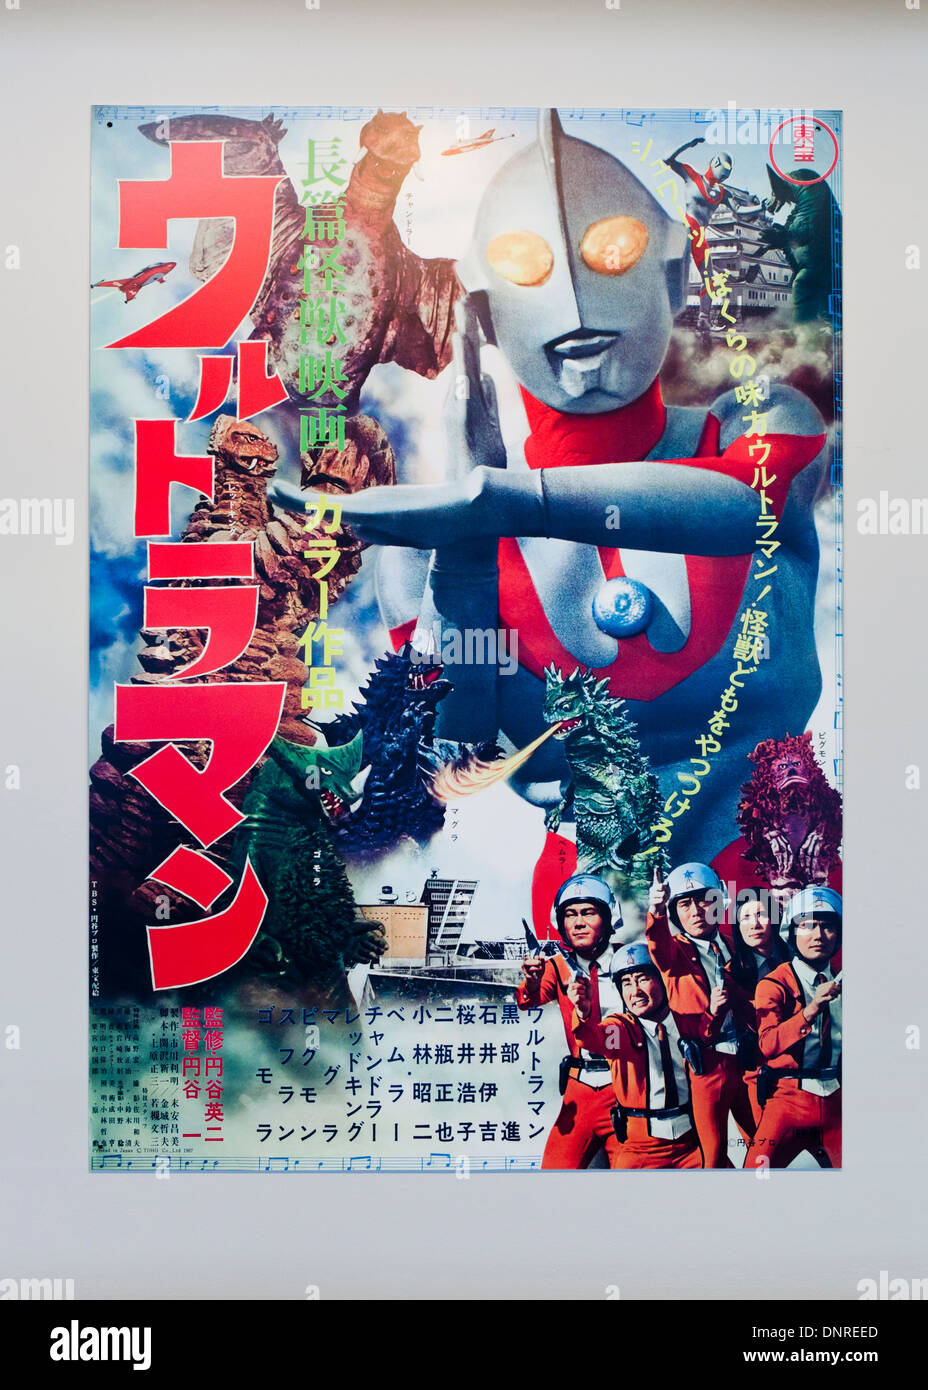 'Ultraman' vintage Japanese movie poster, circa 1980s Stock Photo